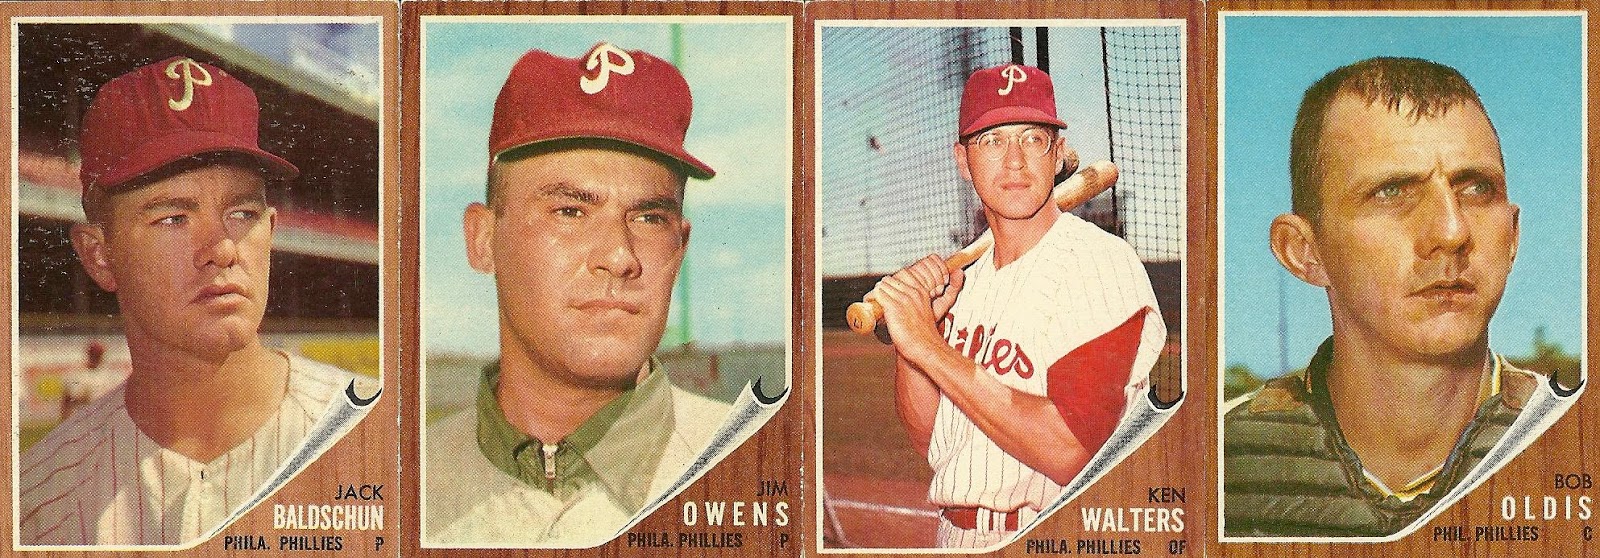  1962 Topps # 111 GRN Dallas Green Philadelphia Phillies ( Baseball Card) (Green Tint) VG Phillies : Collectibles & Fine Art